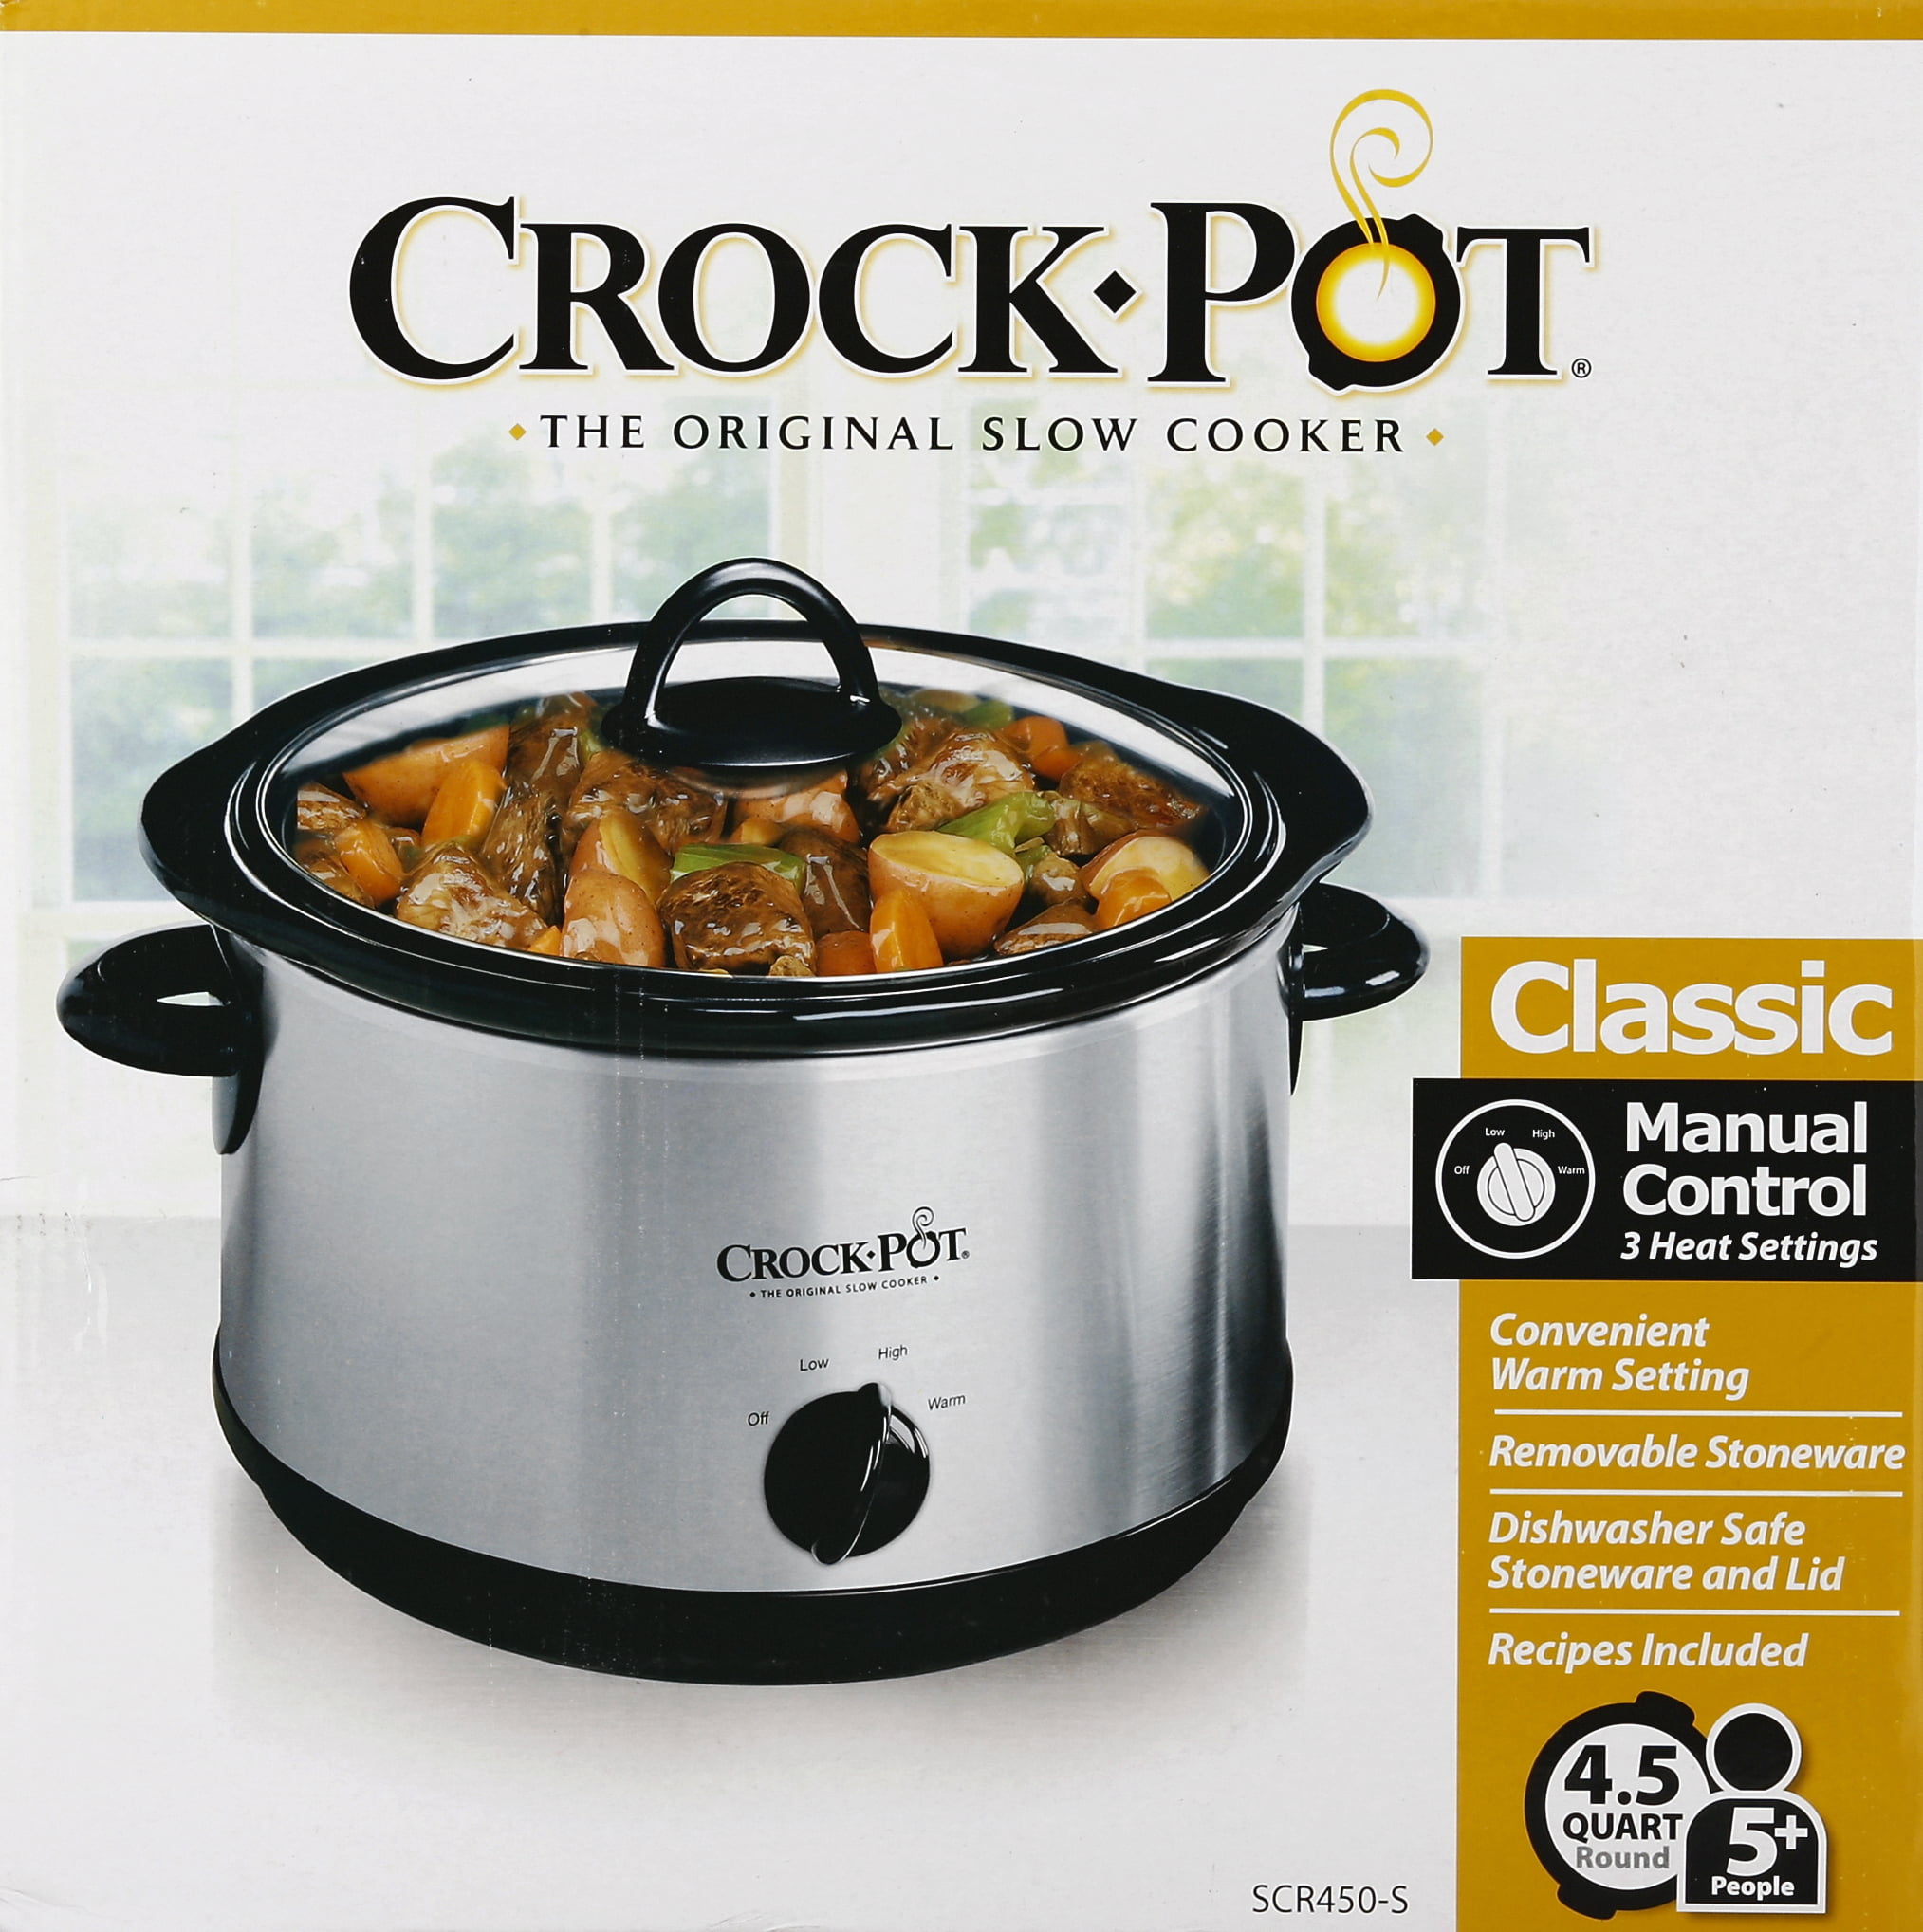  Crockpot Classic Slow Cooker 4 Quart Round Model SCR